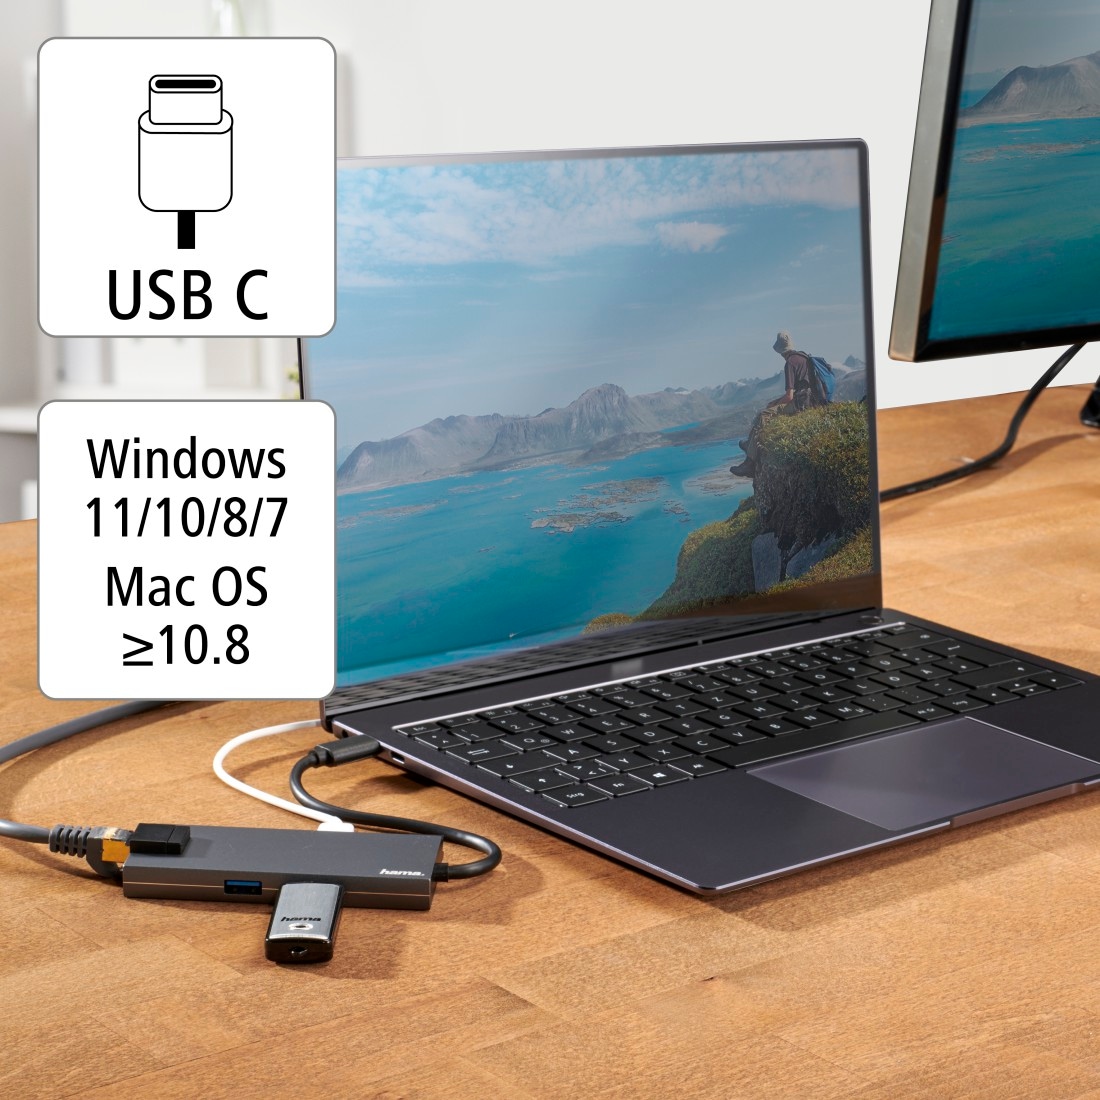 Hama USB-Adapter »USB-C Multiport Hub für Laptop mit 5 Ports, USB-A, USB-C, HDMI, LAN«, USB-C zu USB Typ C-USB Typ A-HDMI-RJ-45 (Ethernet), 15 cm, Laptop Dockingstation, kompakt, robustes Gehäuse, silberfarben